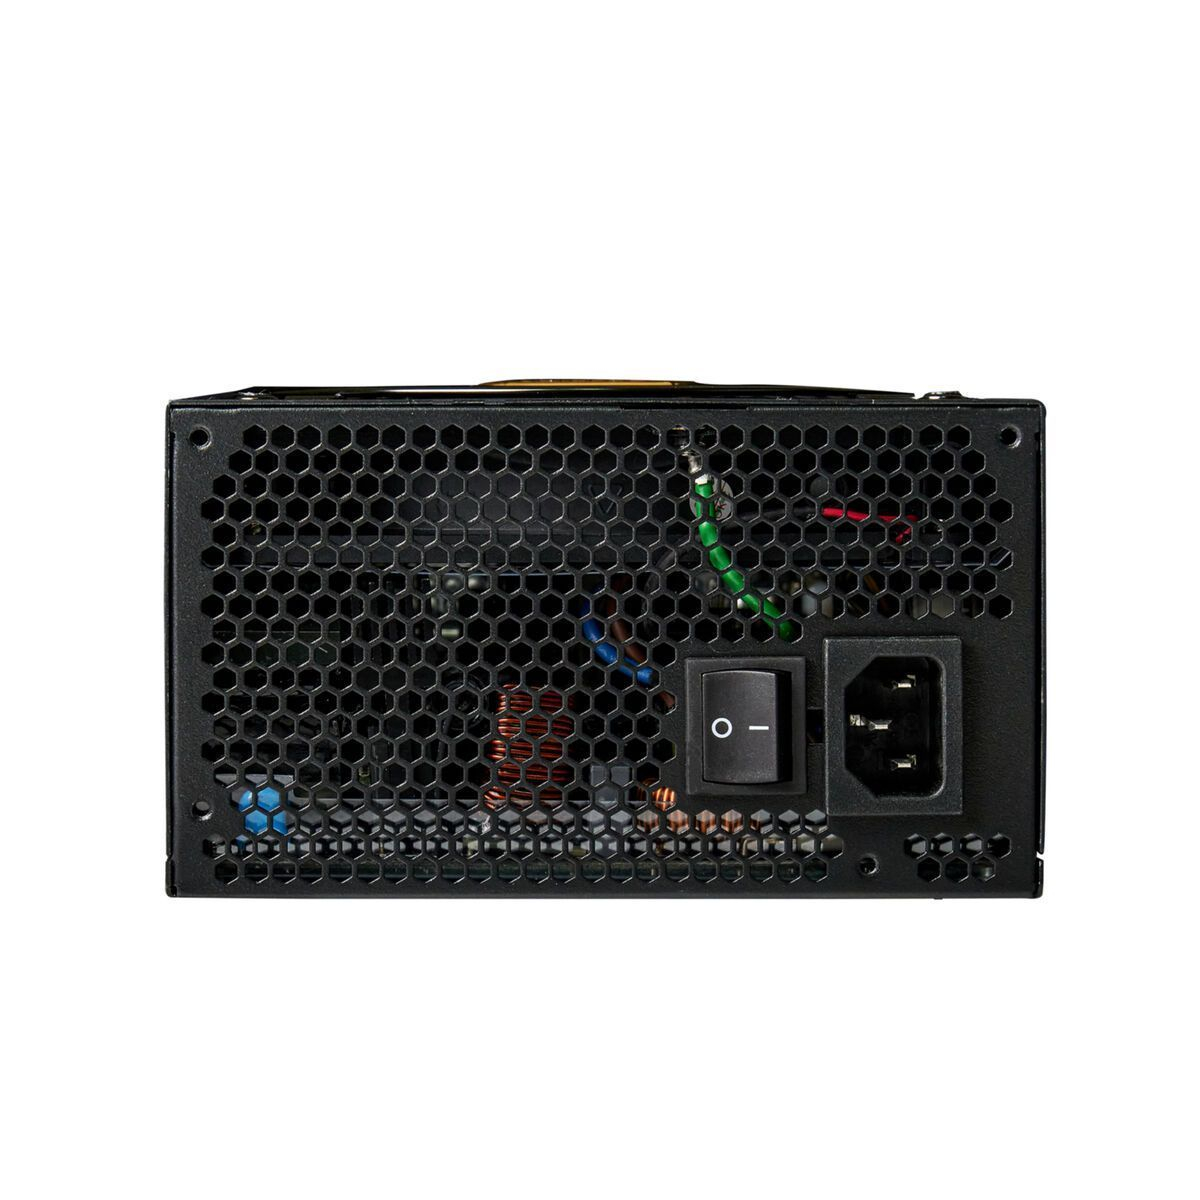 Watt PPS-850FC PC 850 CHIEFTEC Netzteil